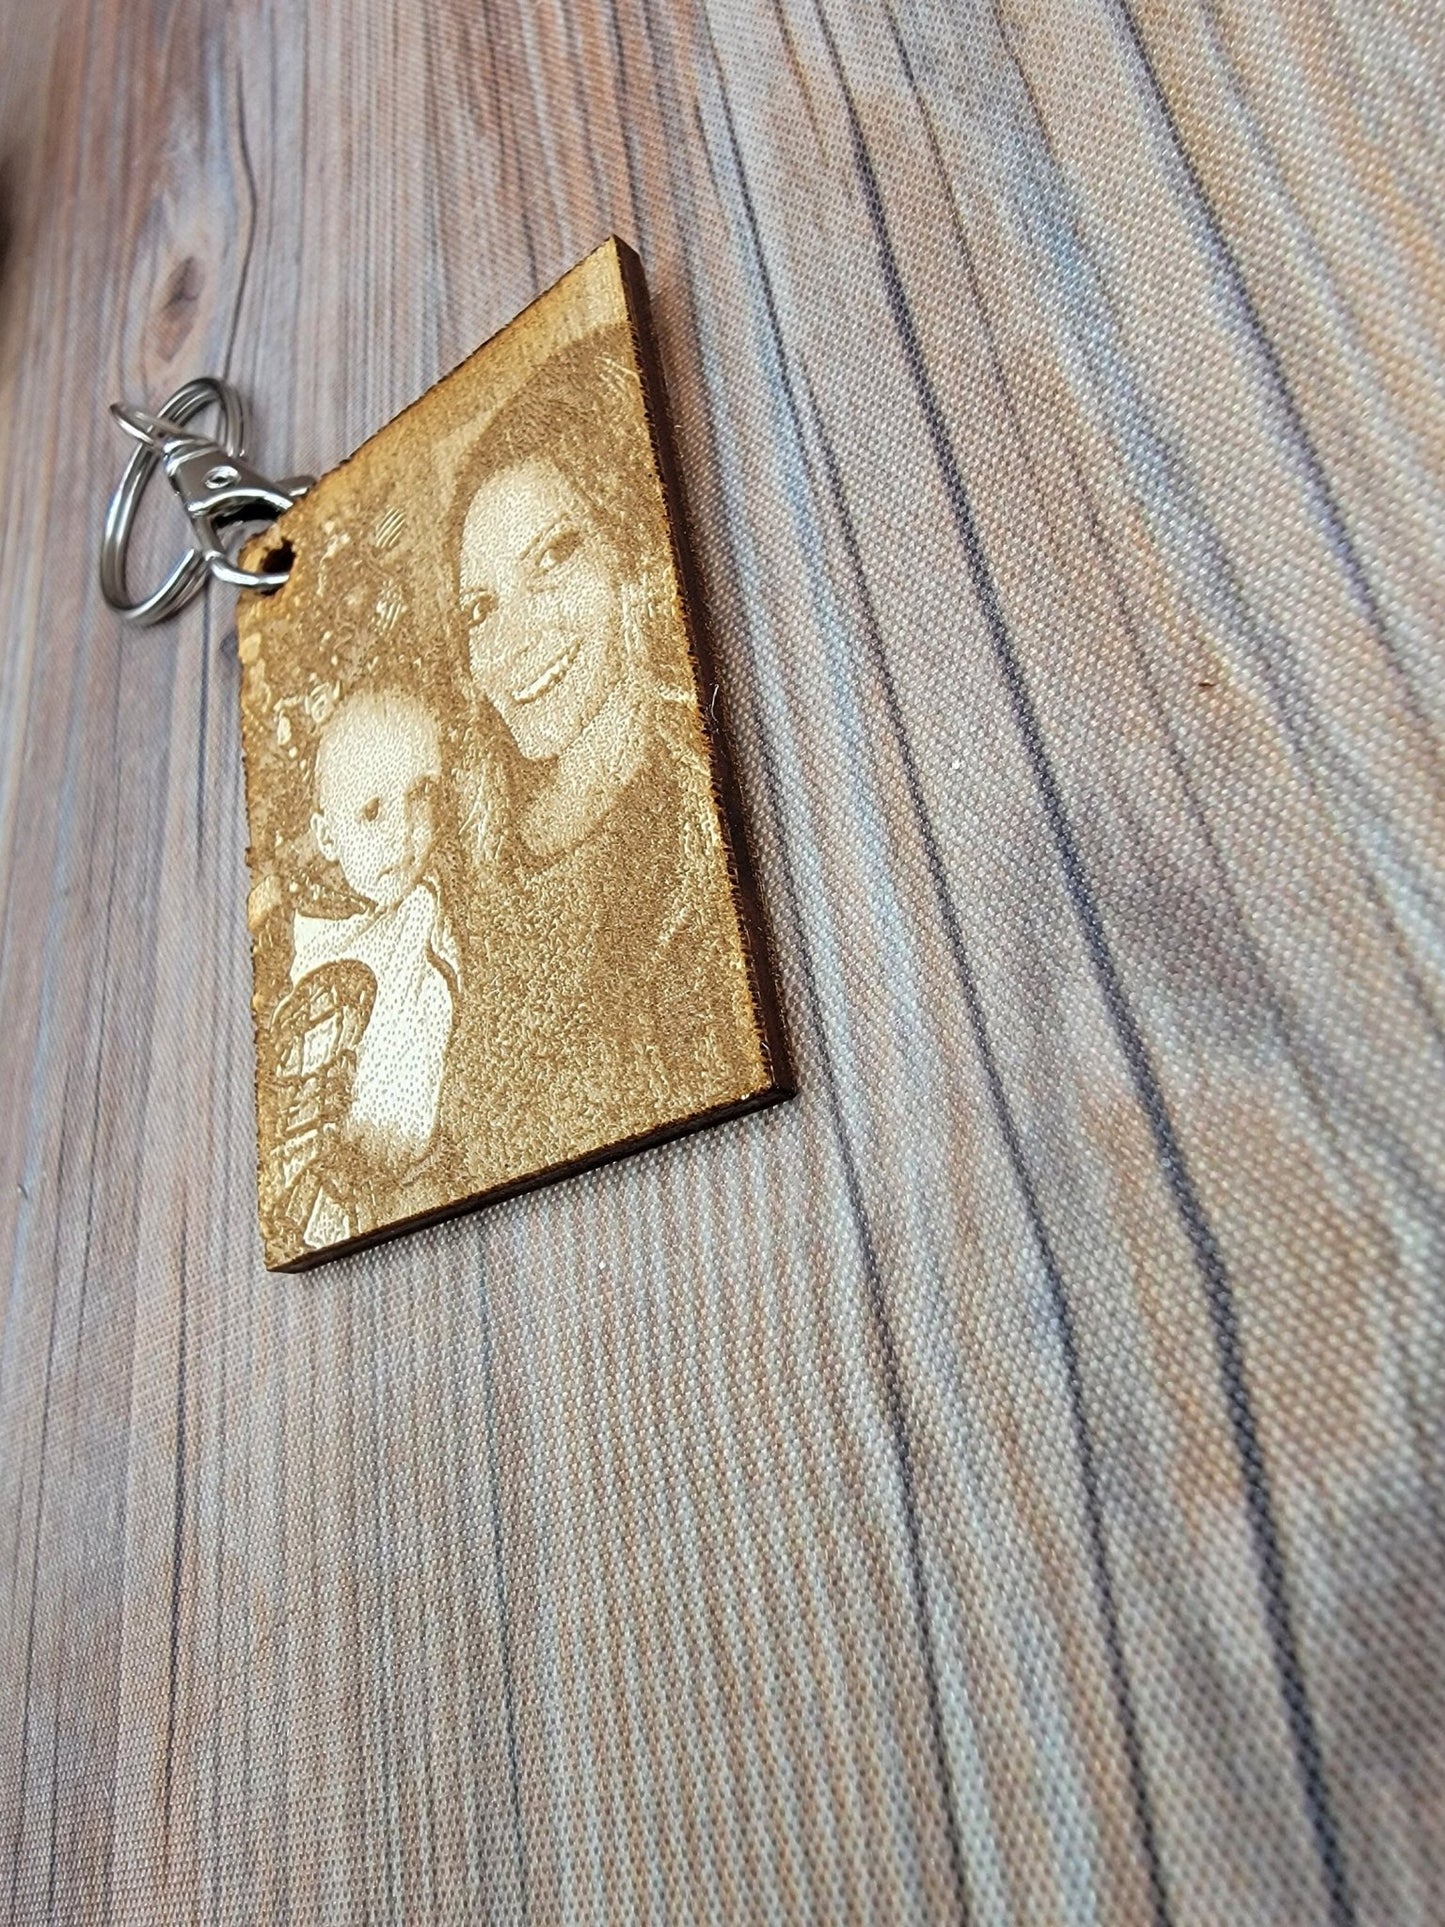 Engraved Personalized Key Chain | Christmas Gift | Custom Photo Key Chain | Keychain Stocking Stuffer - EverLee Creations